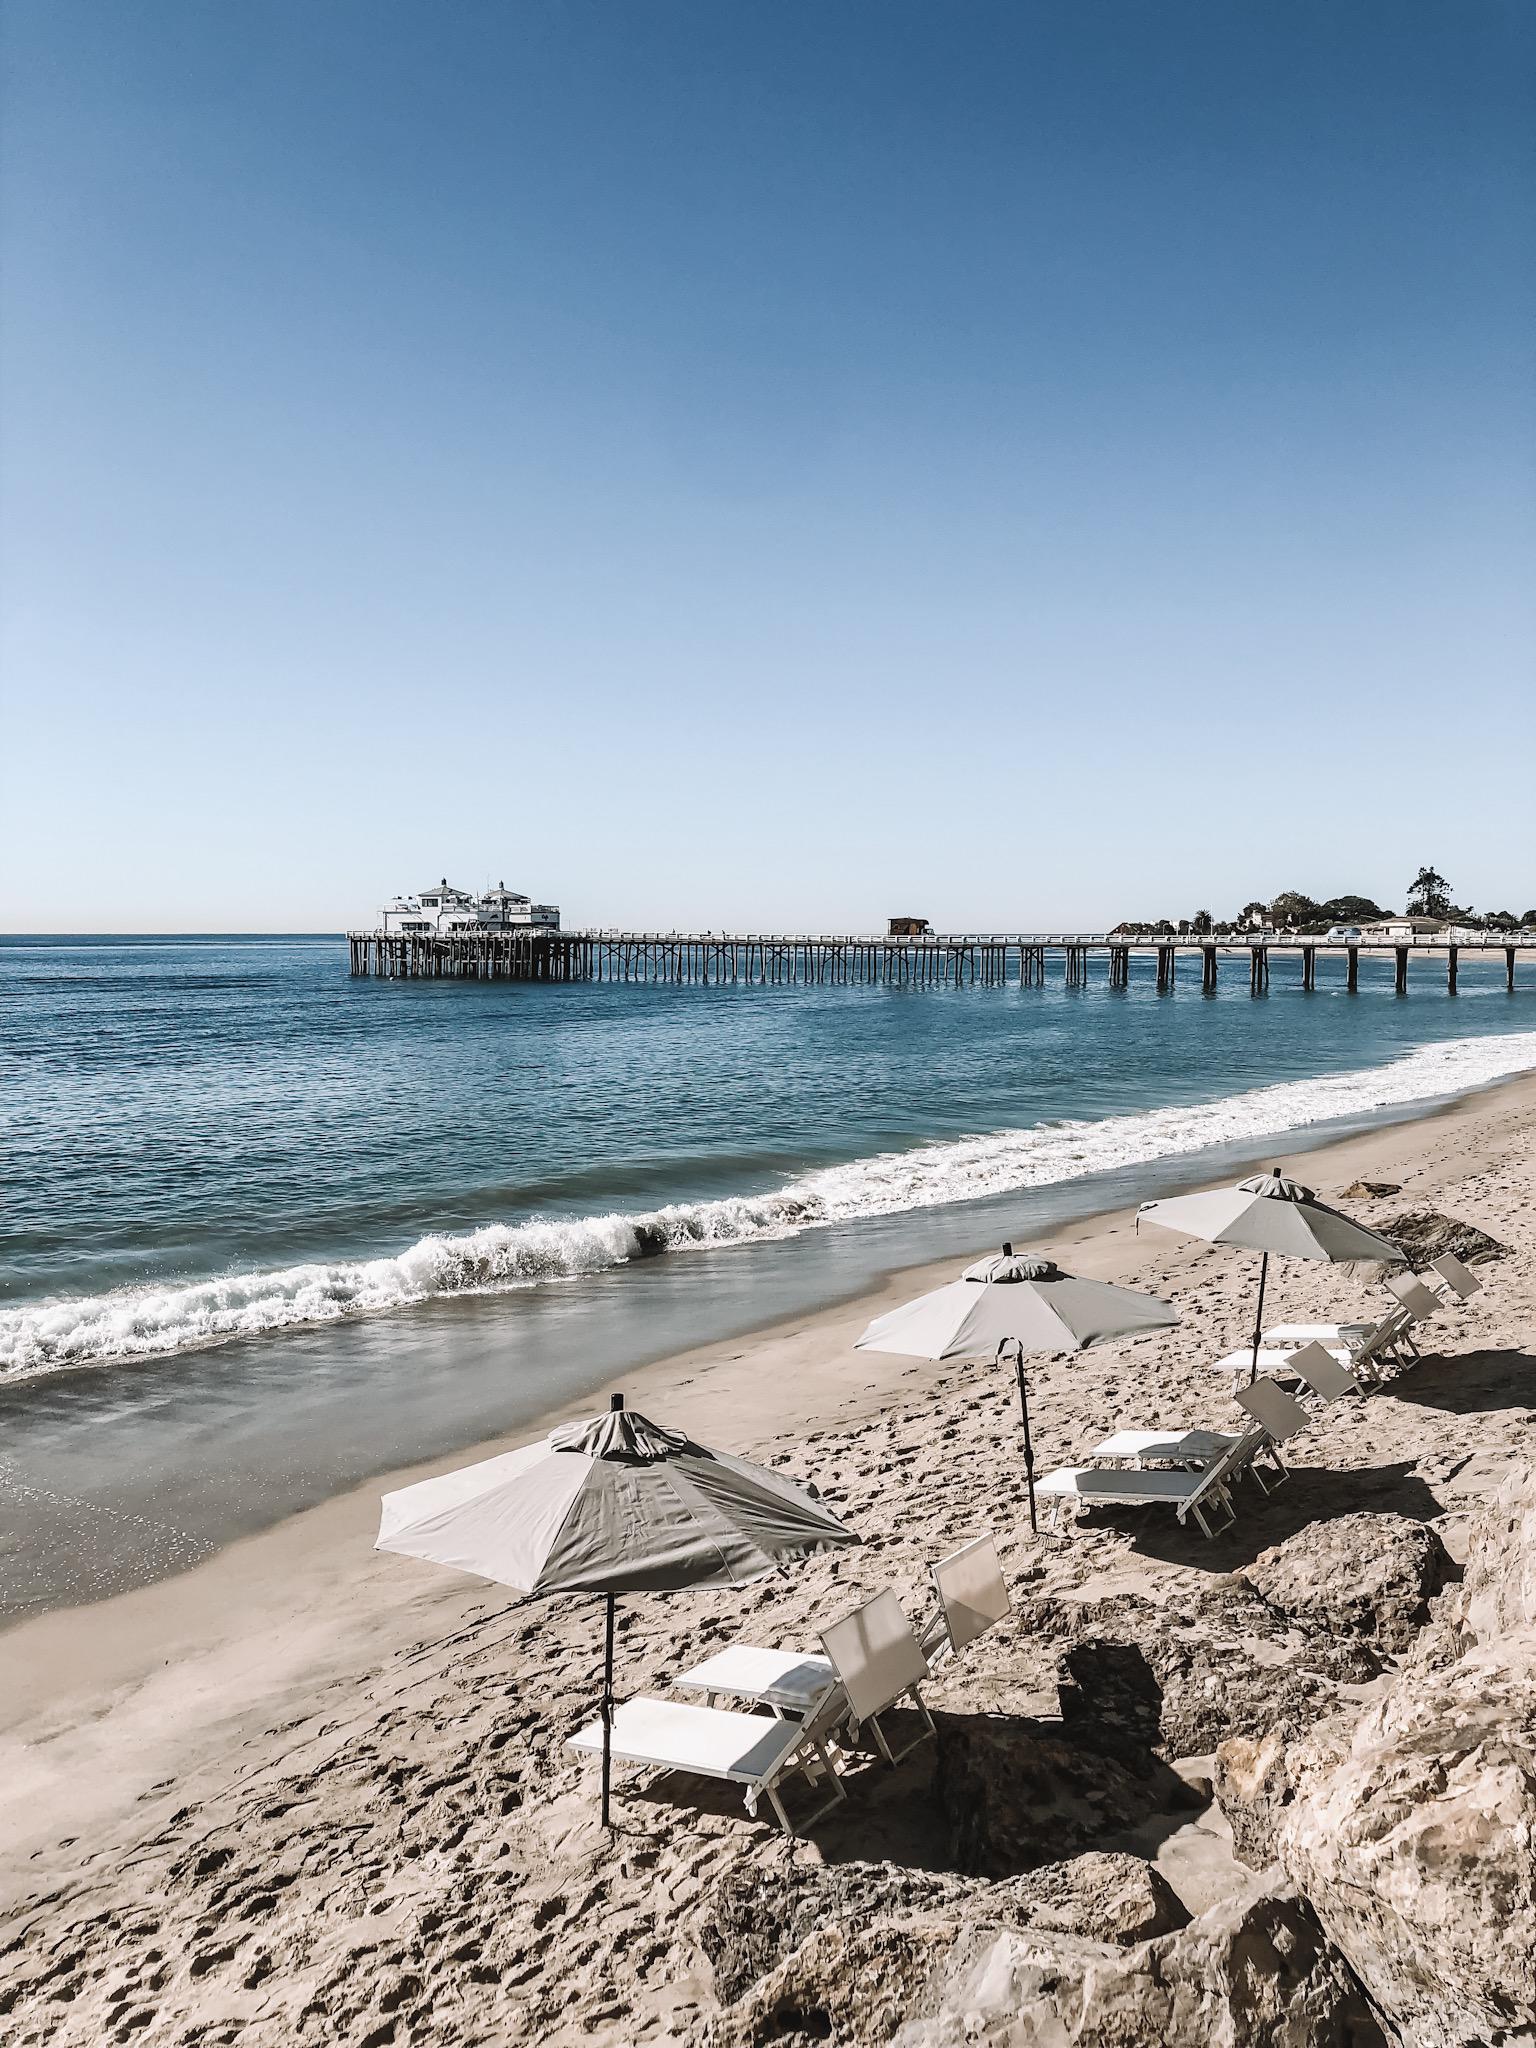 The Malibu Beach Inn: Our Engagement Story